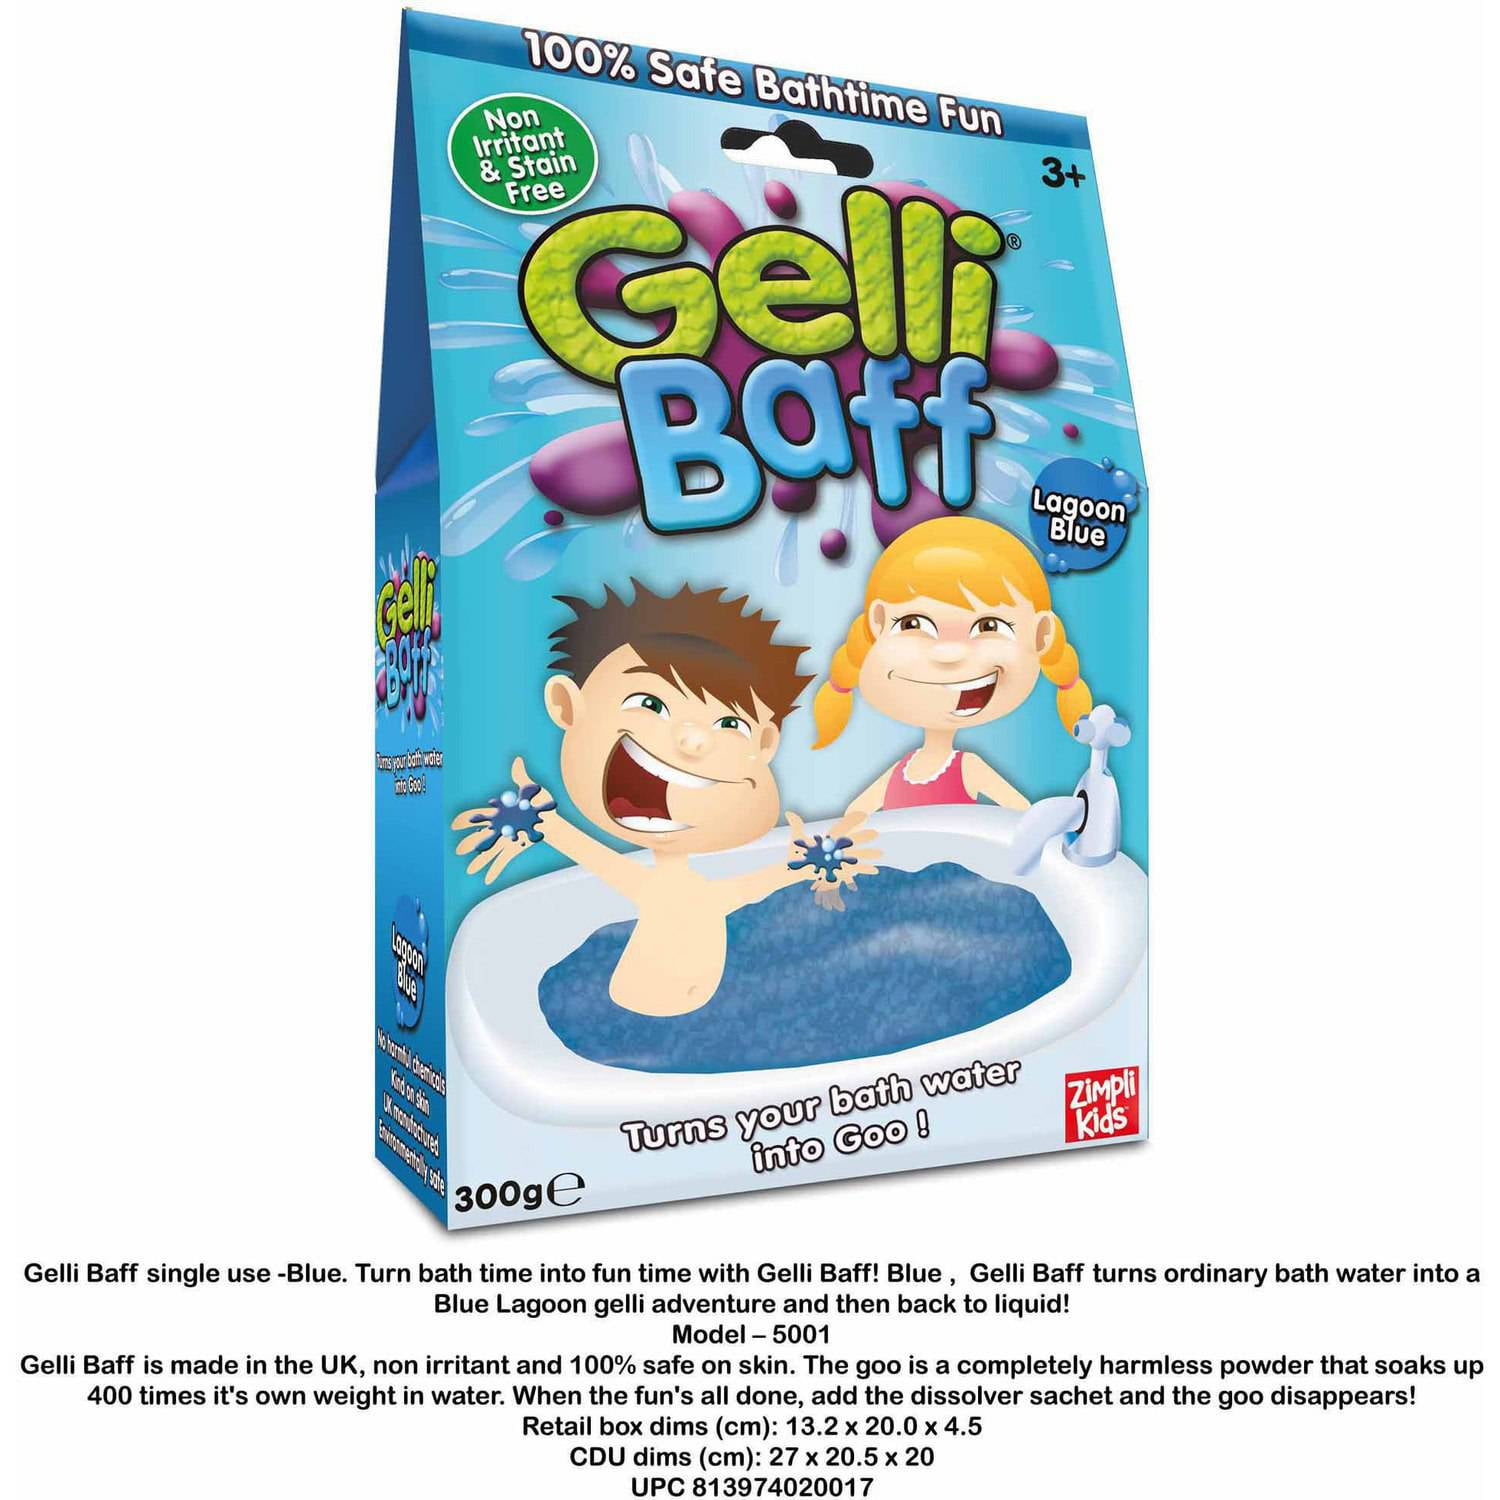 Zimple Baff Water Colours Fun Bath  Bathtime Fun Toys Play Gift